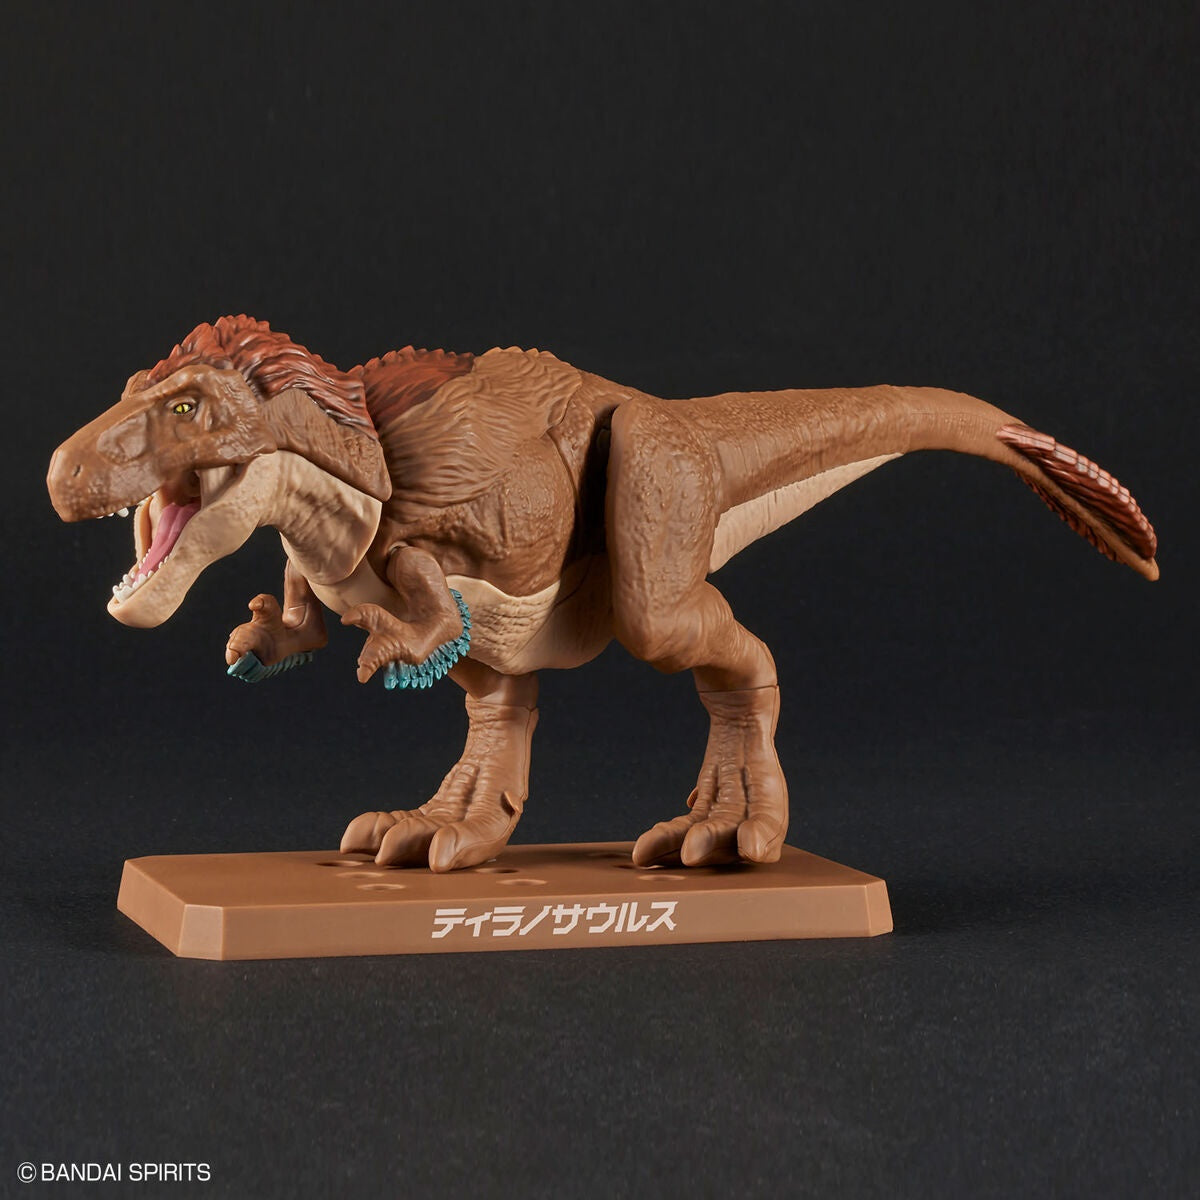 Dinosaur Plastic Model Kit Brand Tyrannosaurus